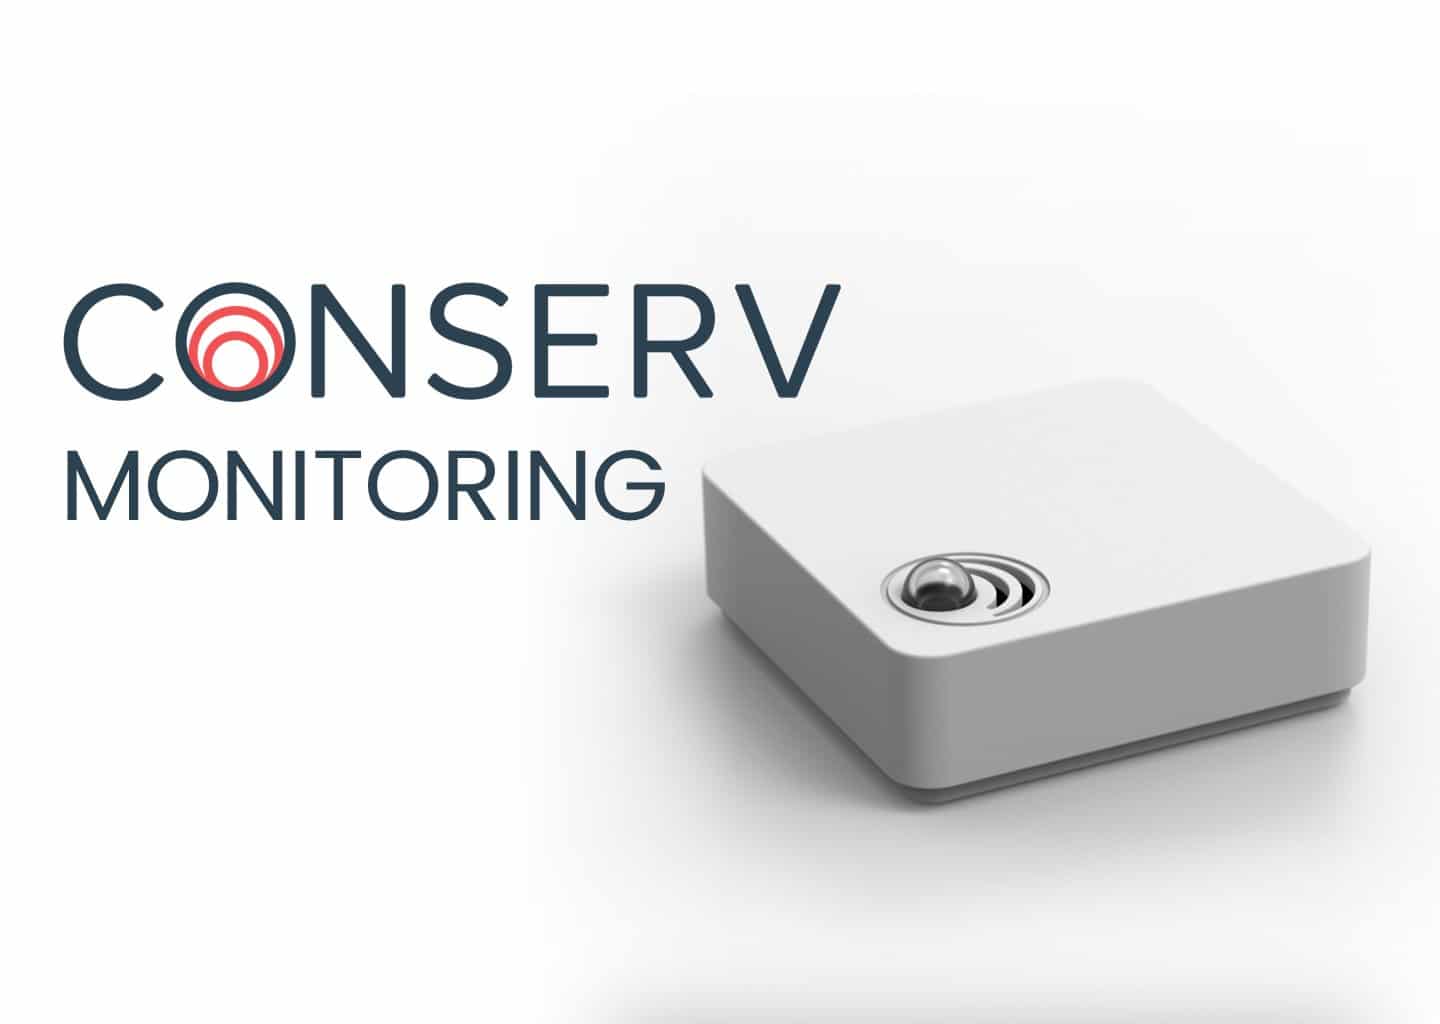 Conserv environmental monitoring. Image of a white Conserv smart sensor.